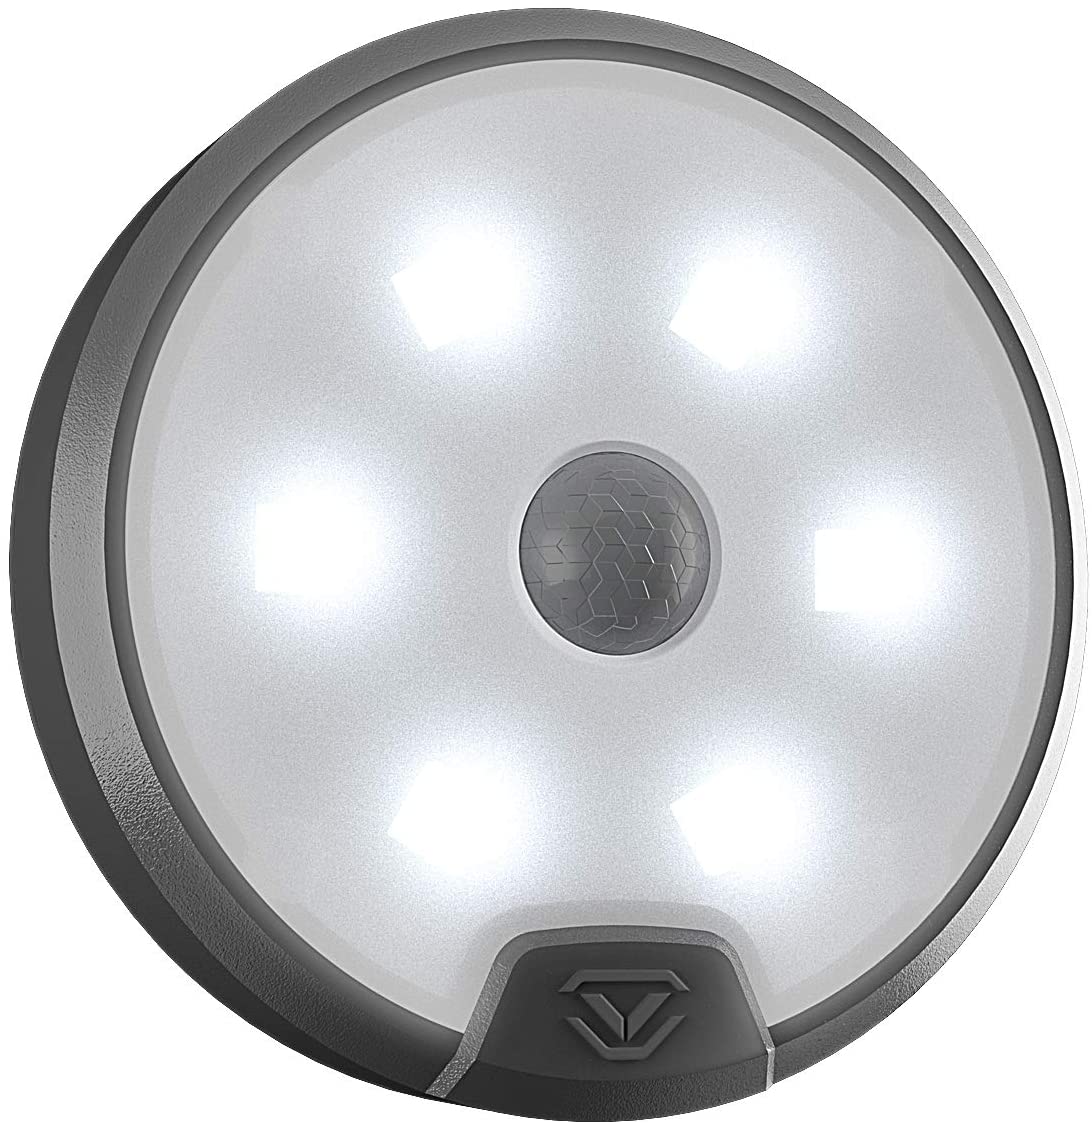 Vaultek VLED6 Motion-Activated Universal LED Light